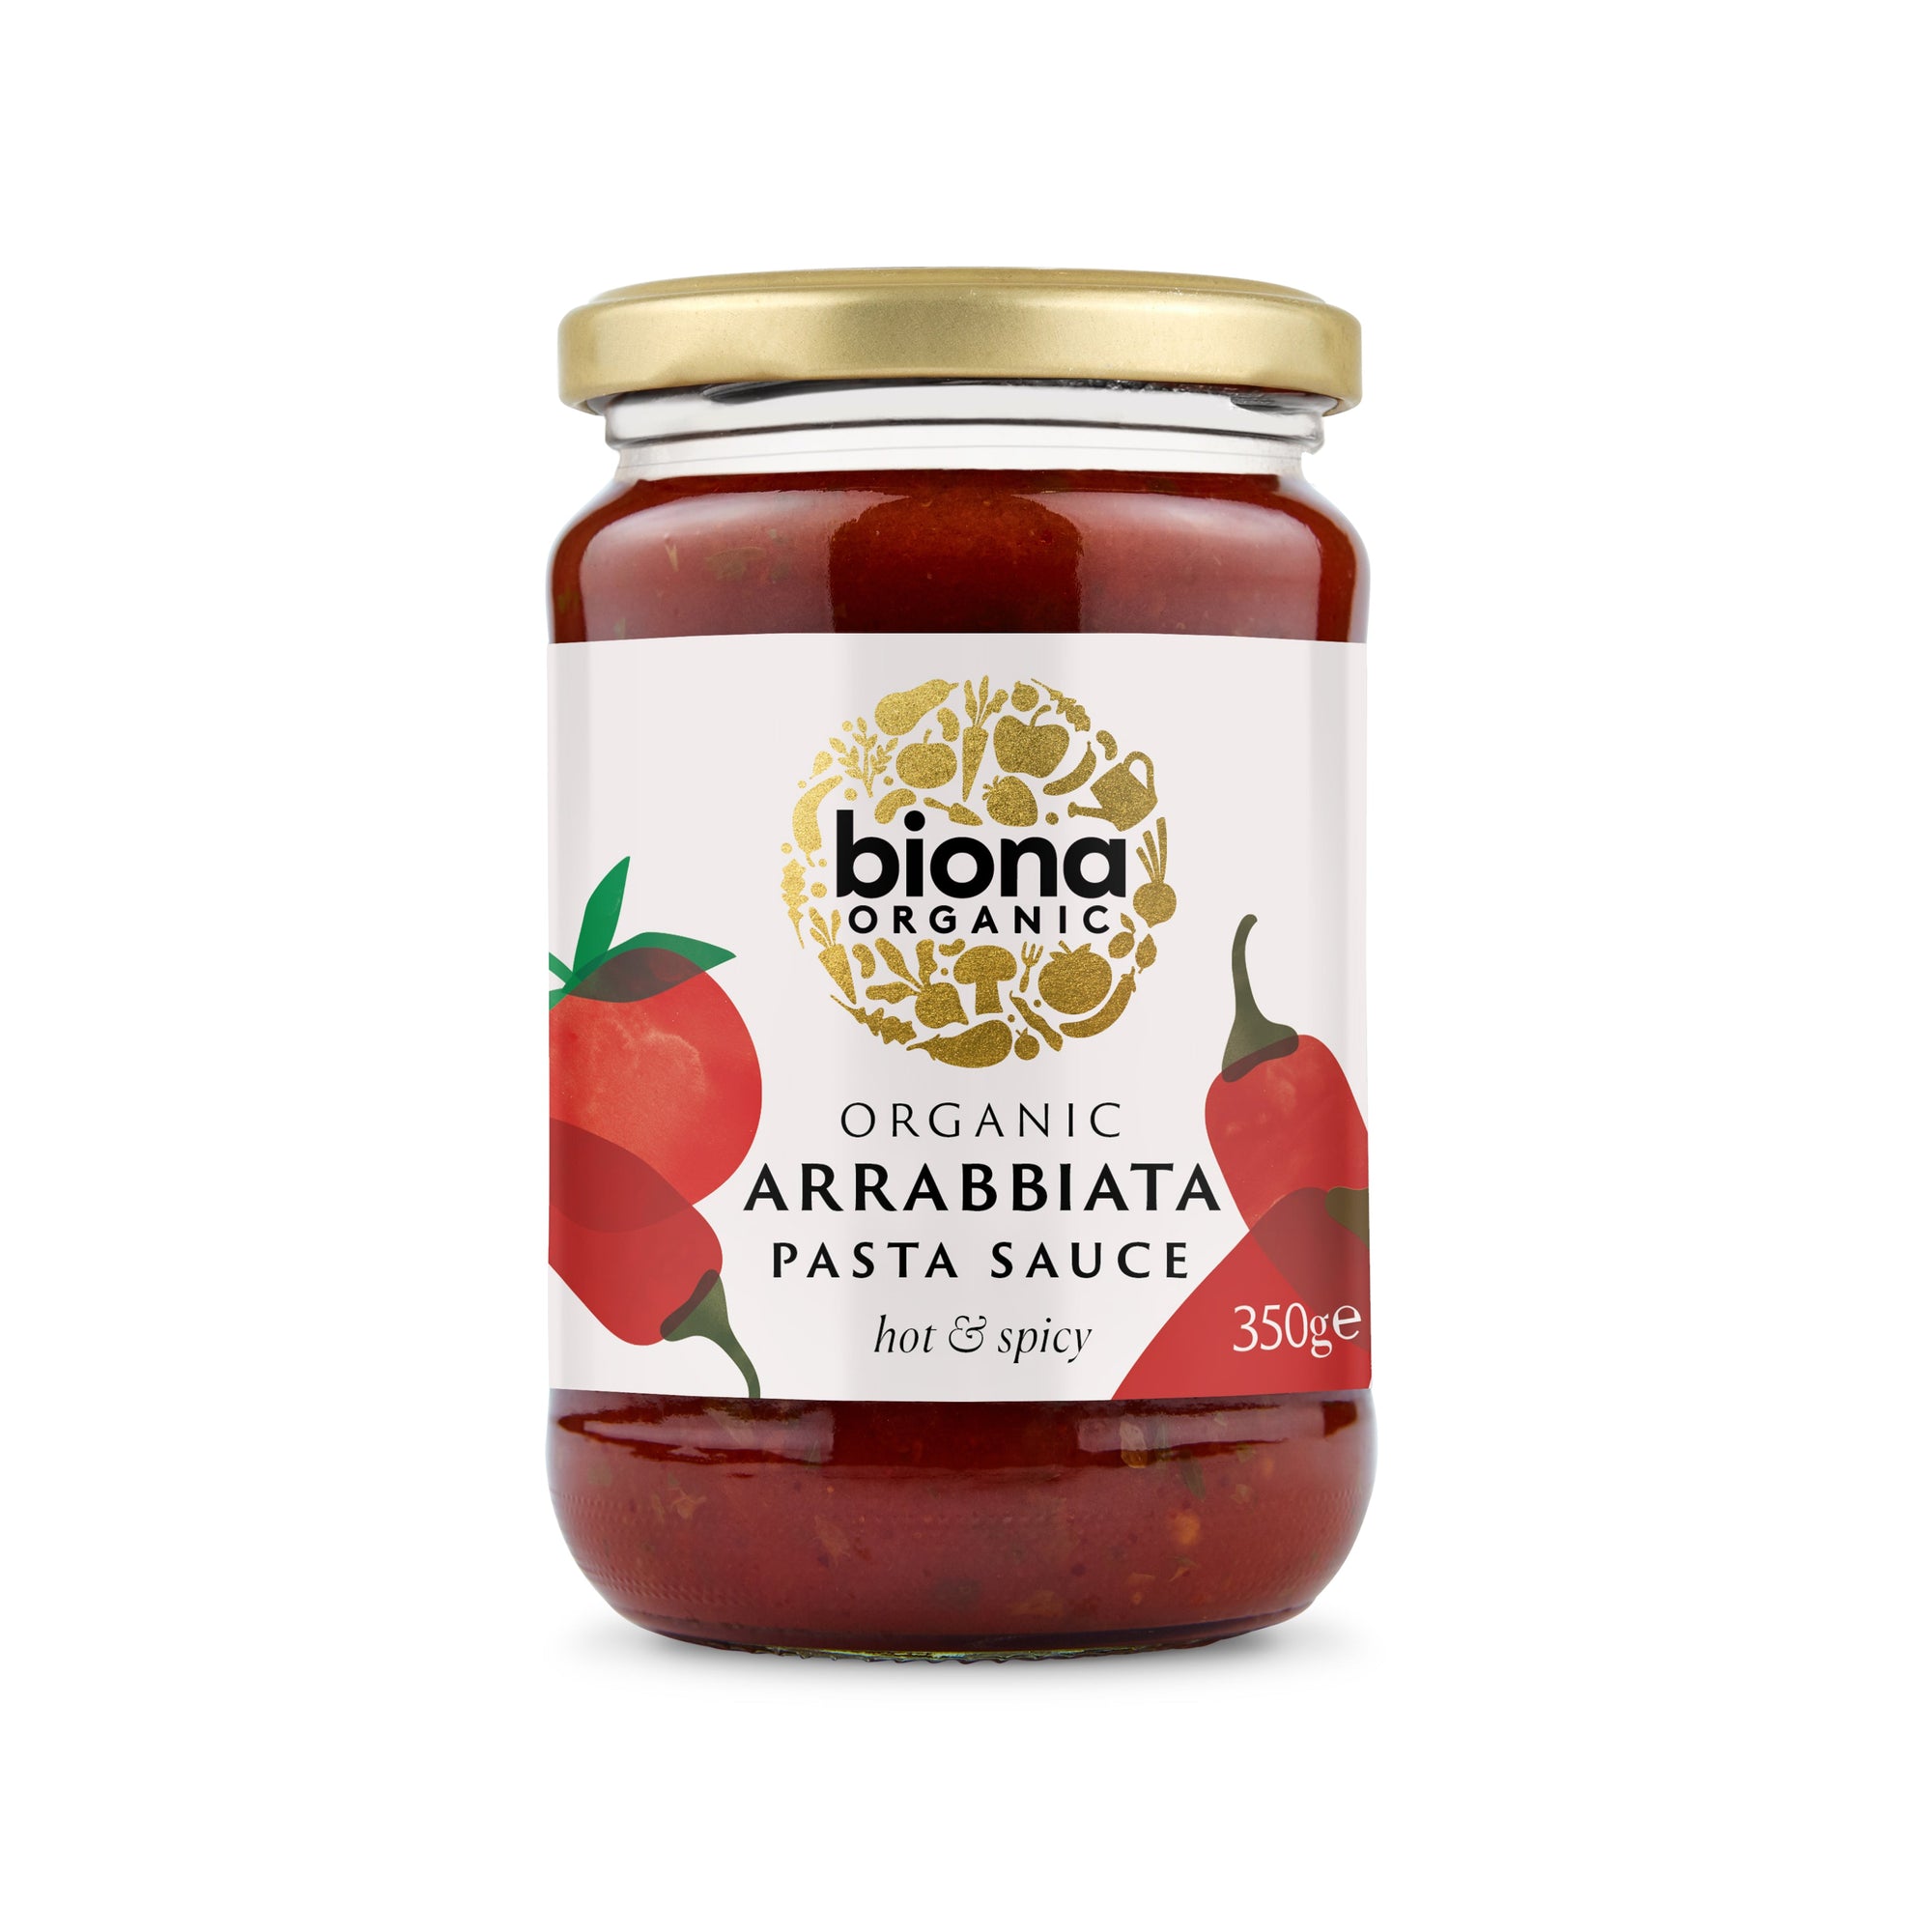 Biona Organic Arrabbiata Pasta Sauce (350g)